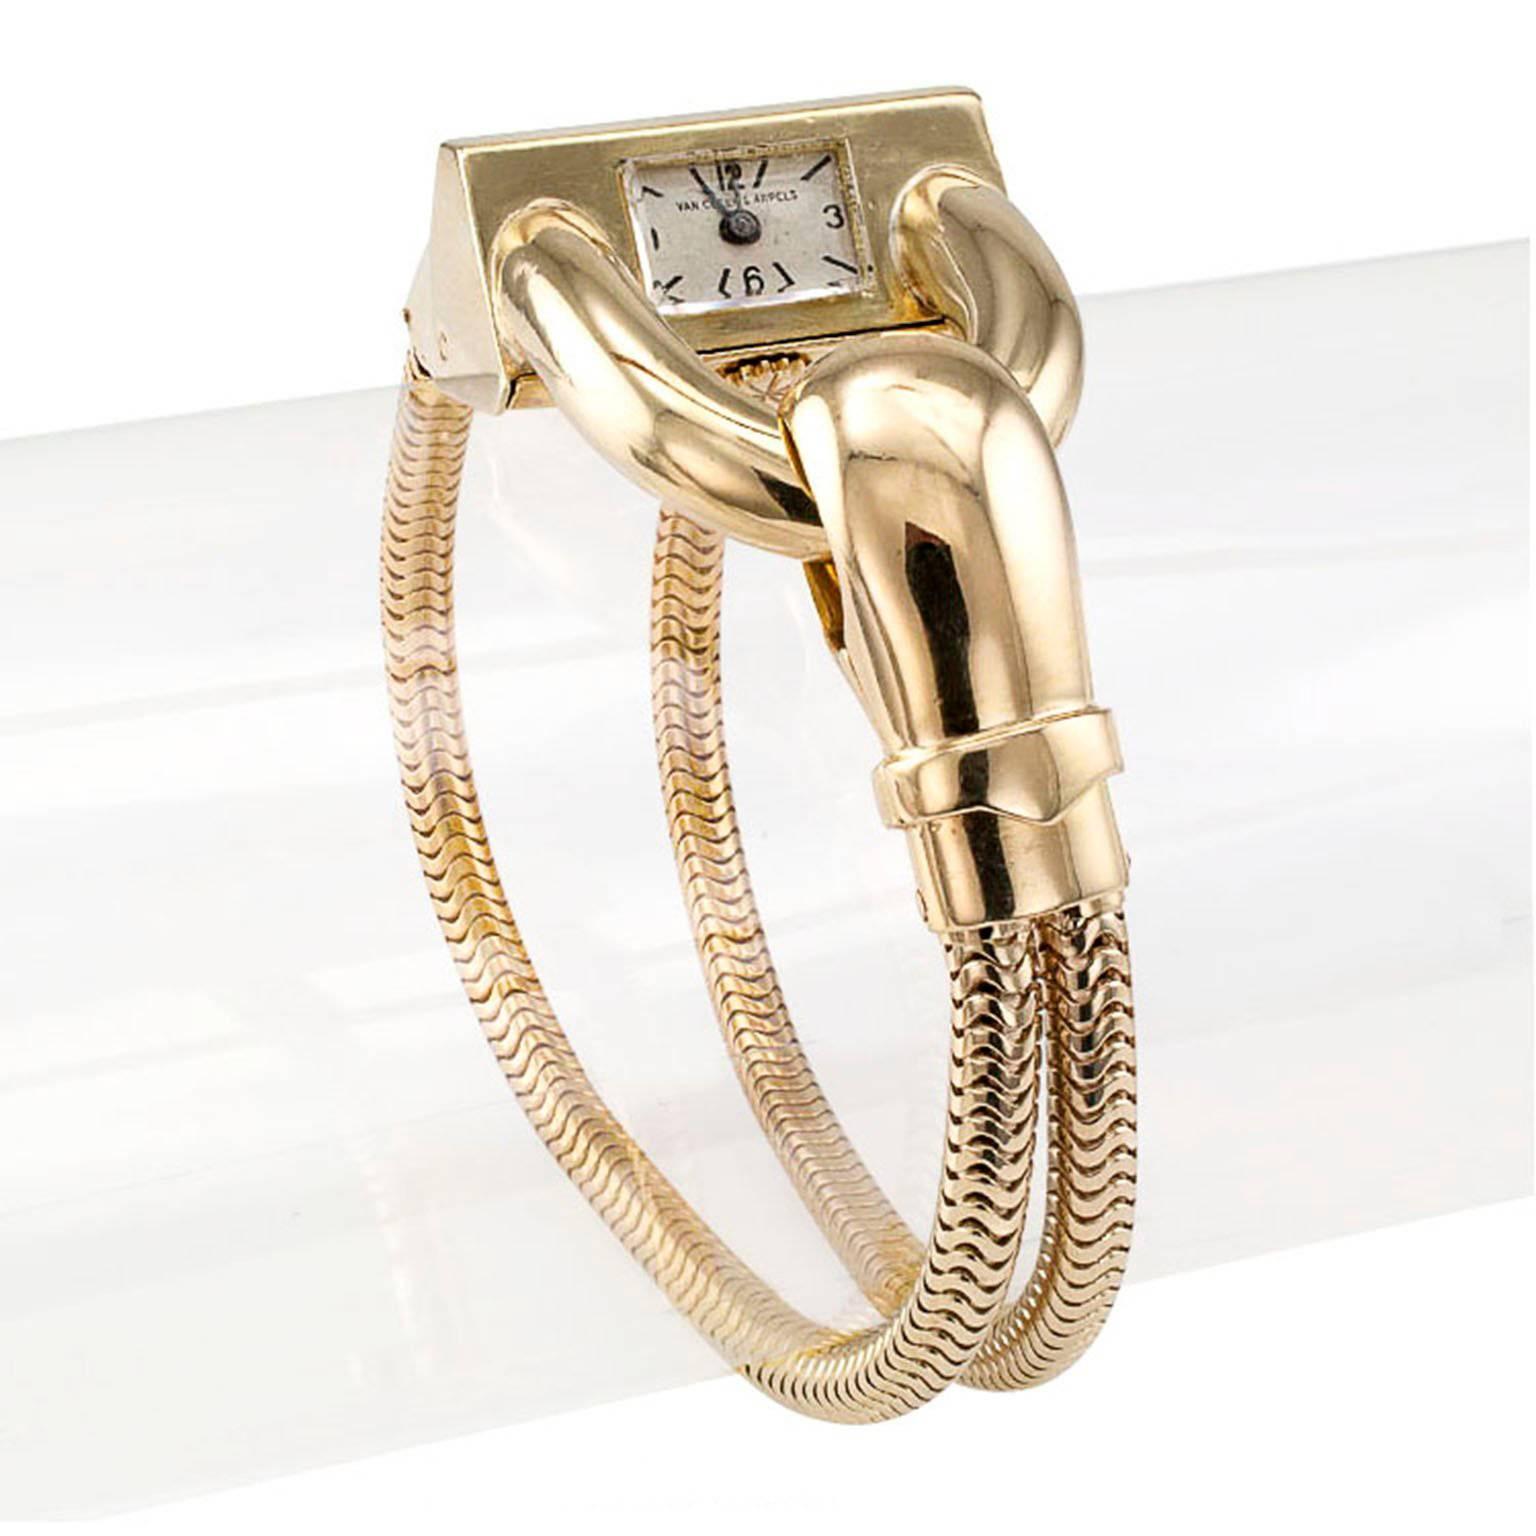  1940s Van Cleef & Arpels Ladies Yellow Gold Cadenas Retro Wristwatch 5